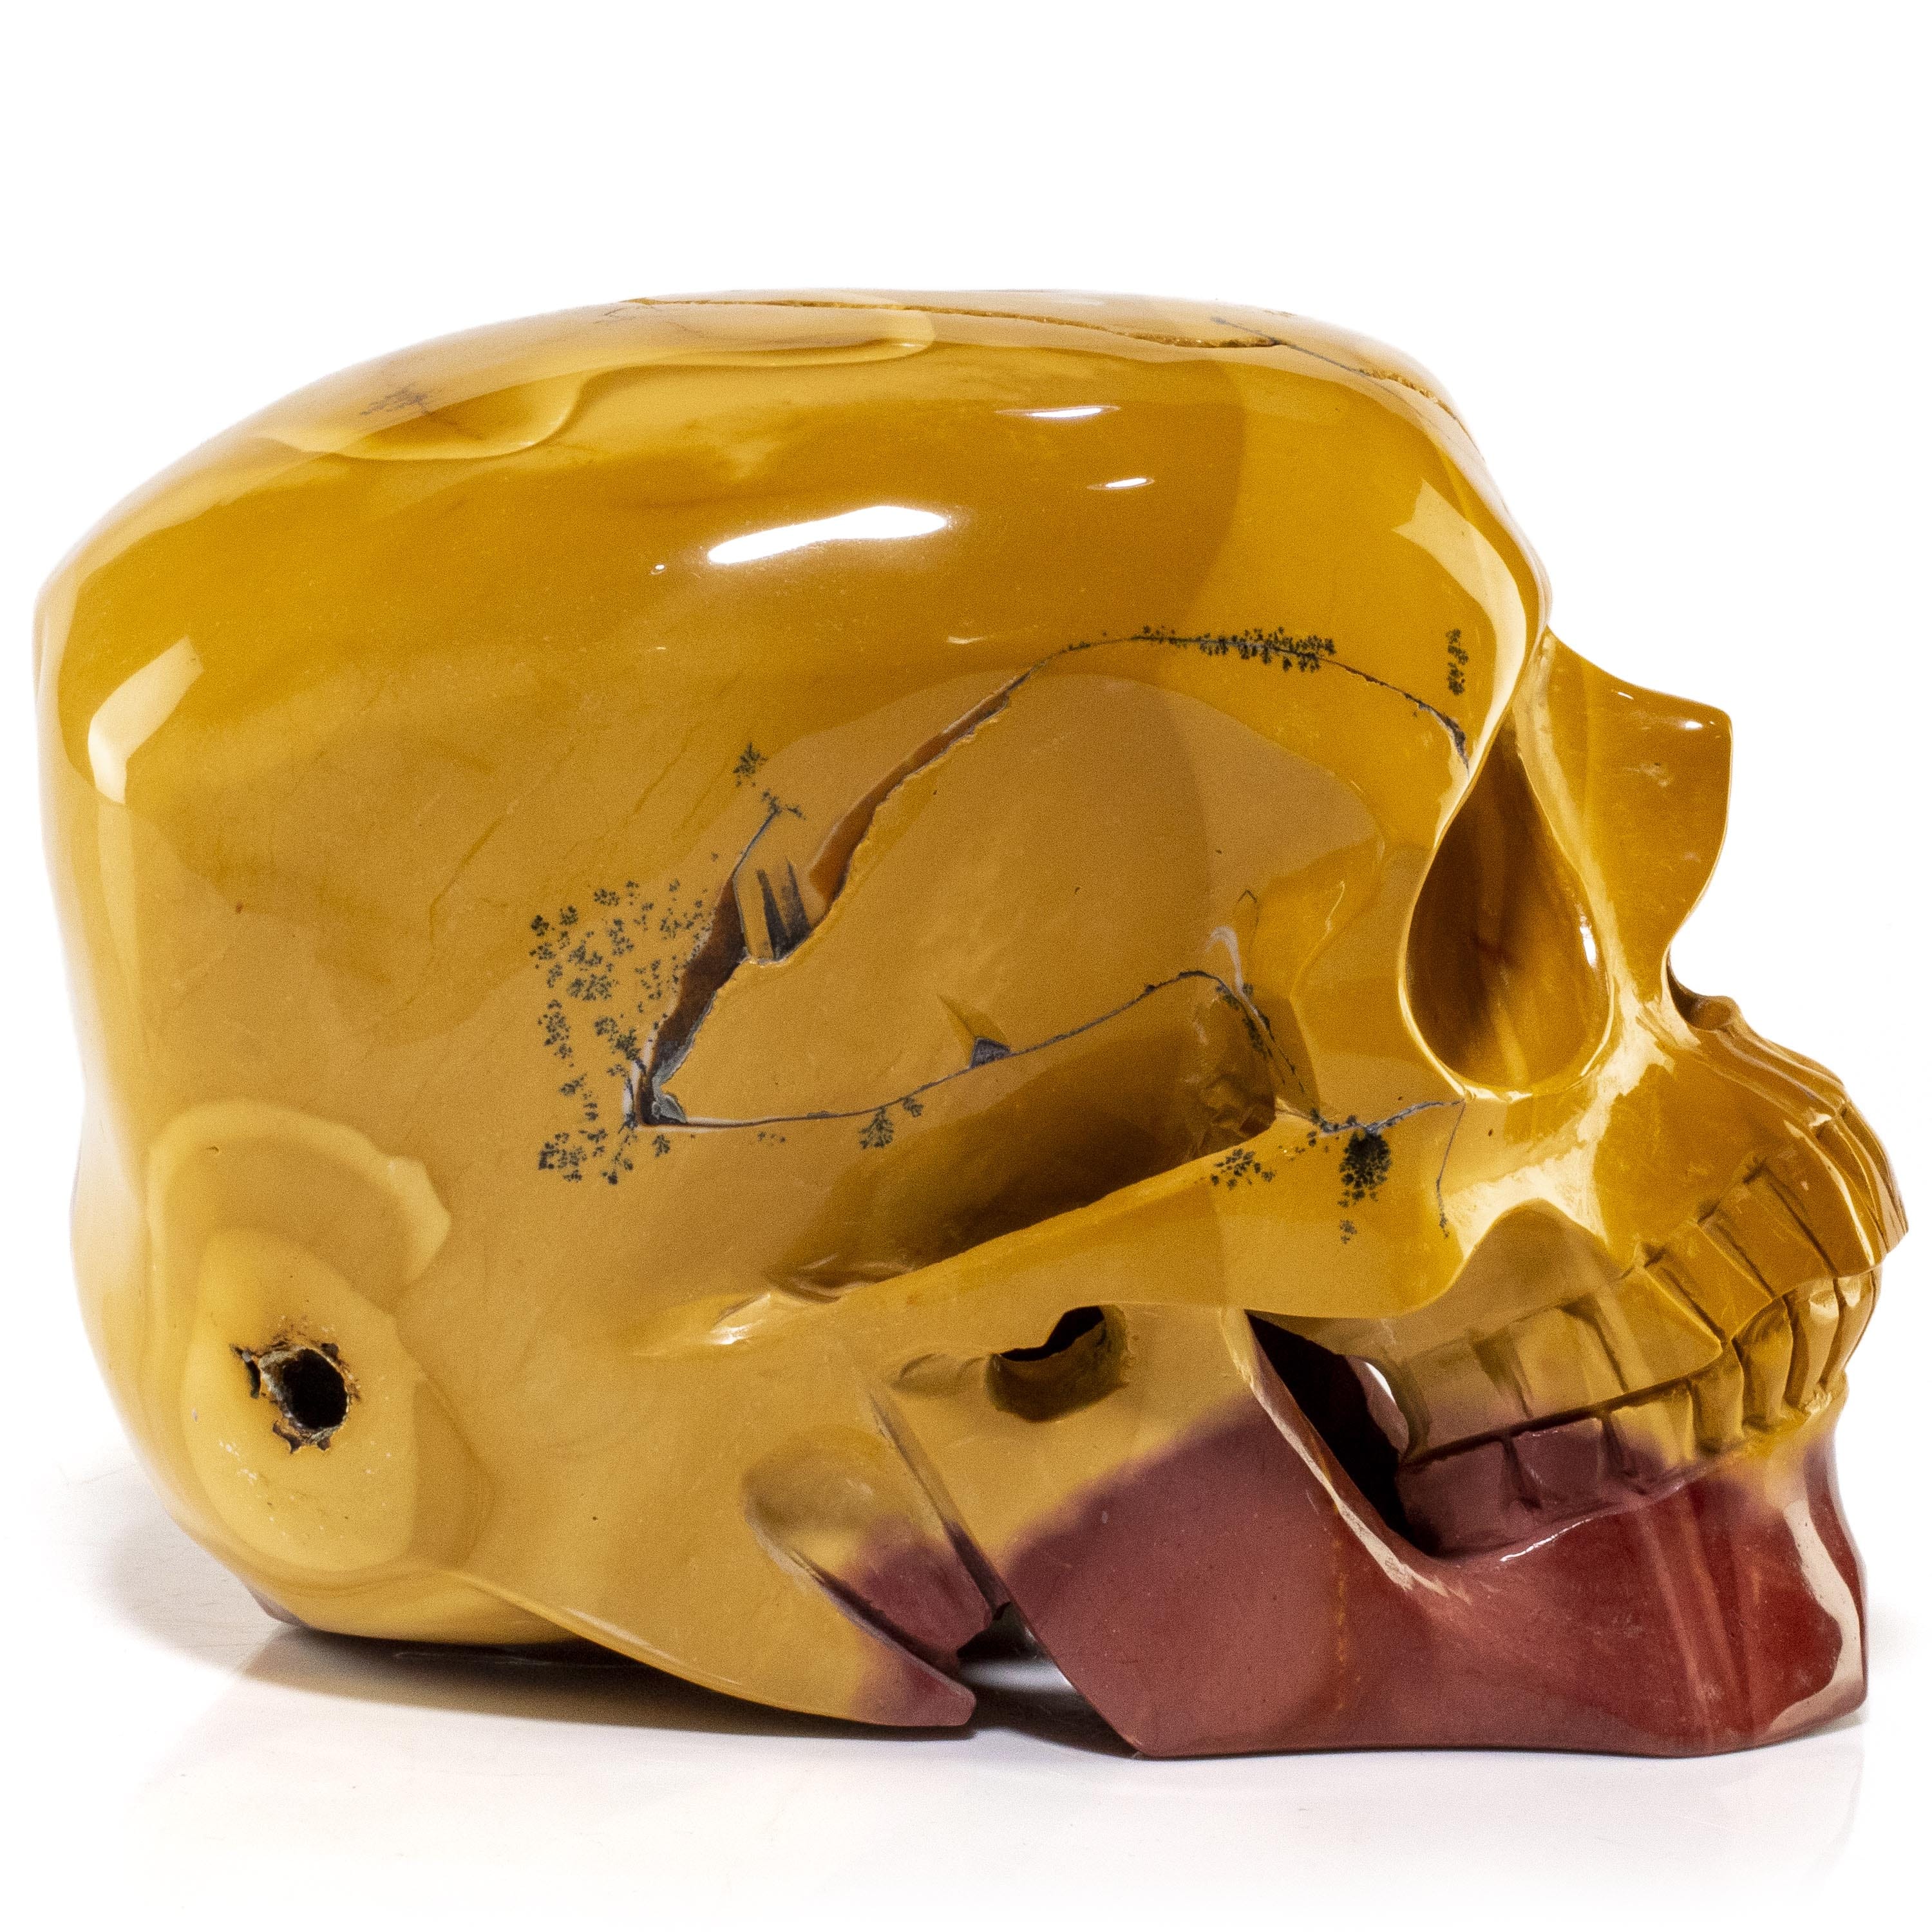 Kalifano Mookaite Mookaite Skull Carving 7" / 4,692g SK10800-MK.001